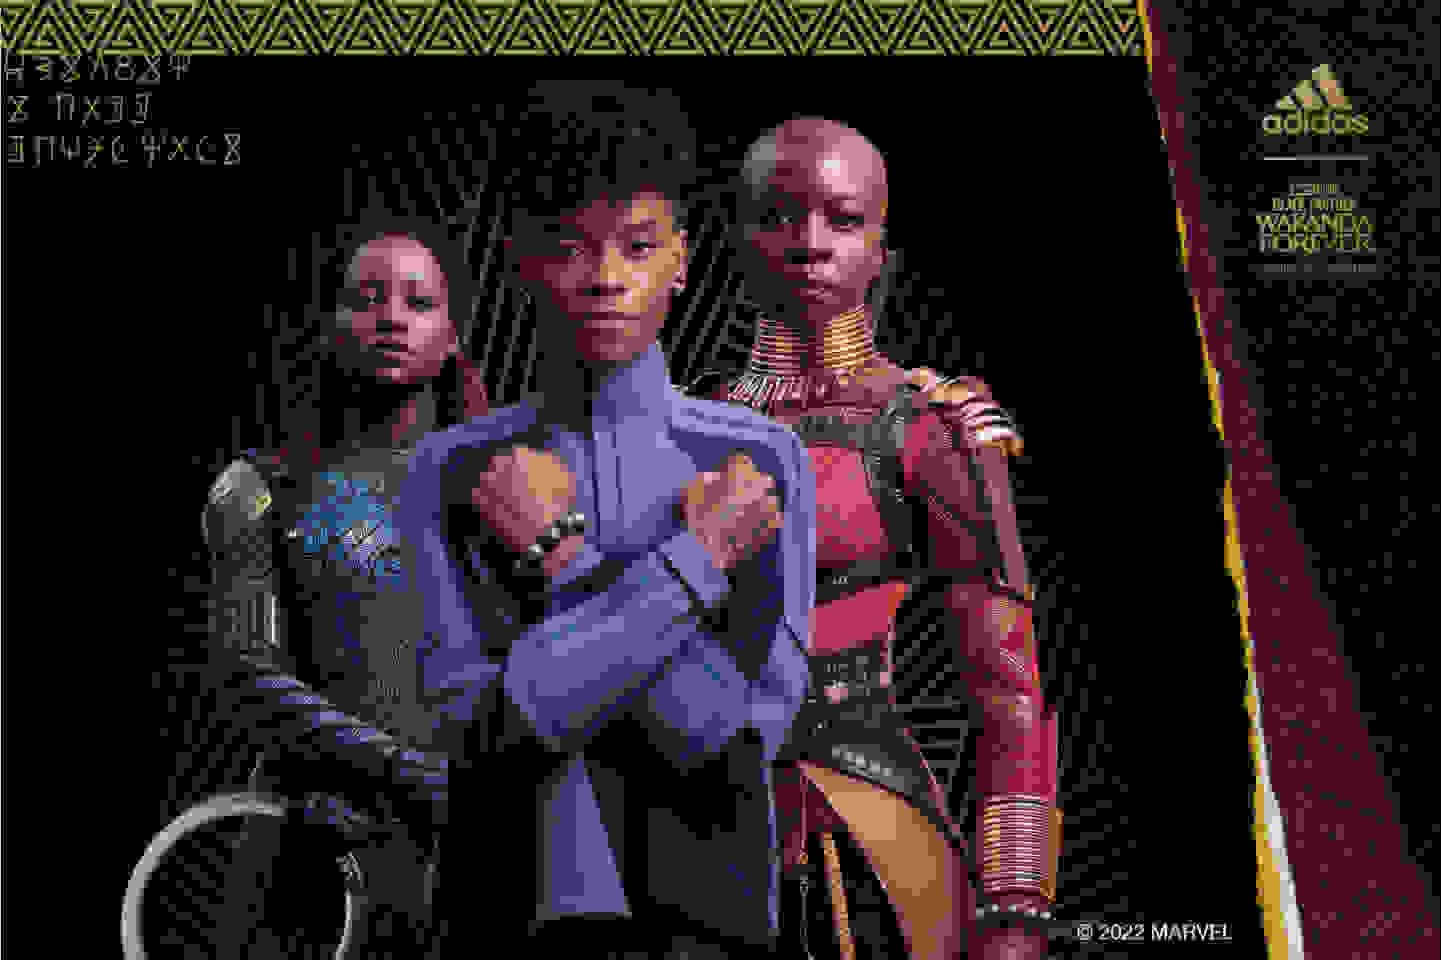 An image of 3 Black Panther Wakanda movie stars